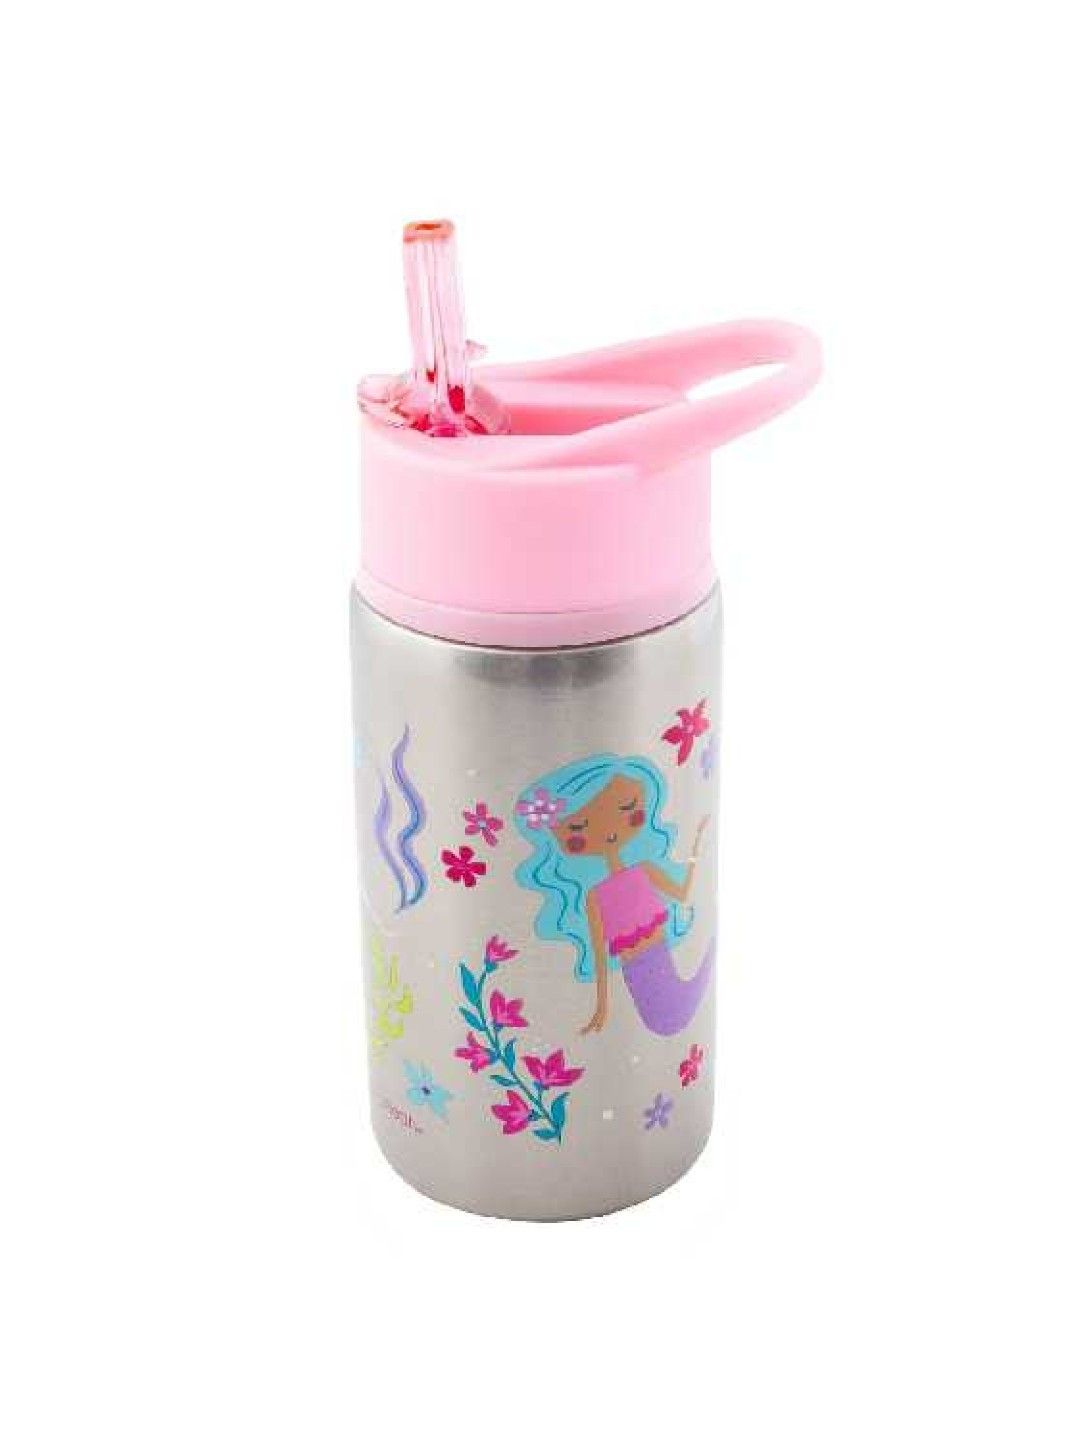 Contigo 14 oz. AutoSpout Striker Kids Water Bottle Petal Pink